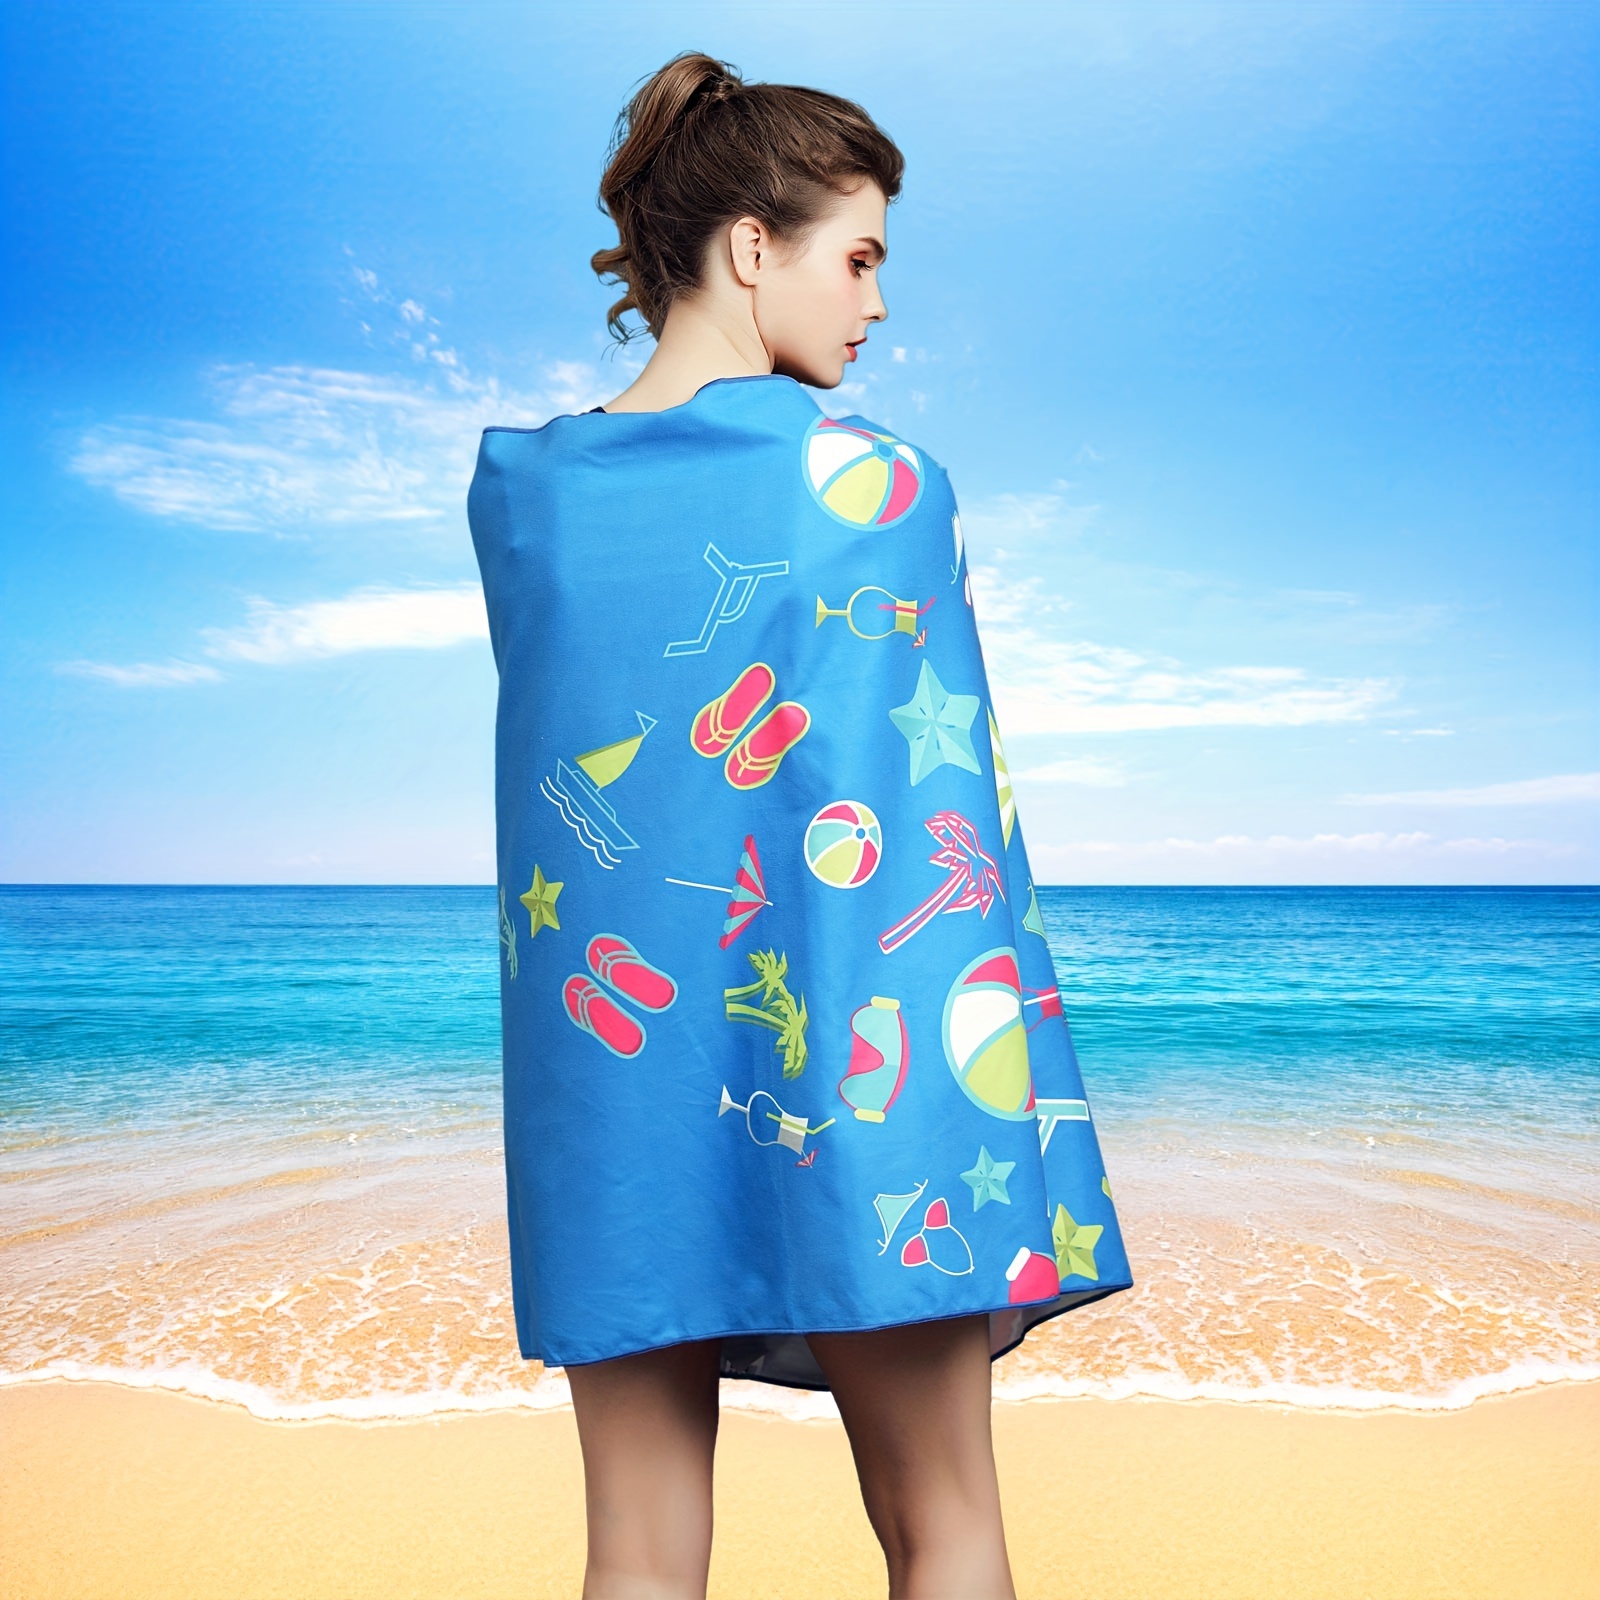 Microfiber Towel Quick Dry for Sports Beach Swim Travel Yoga Gym